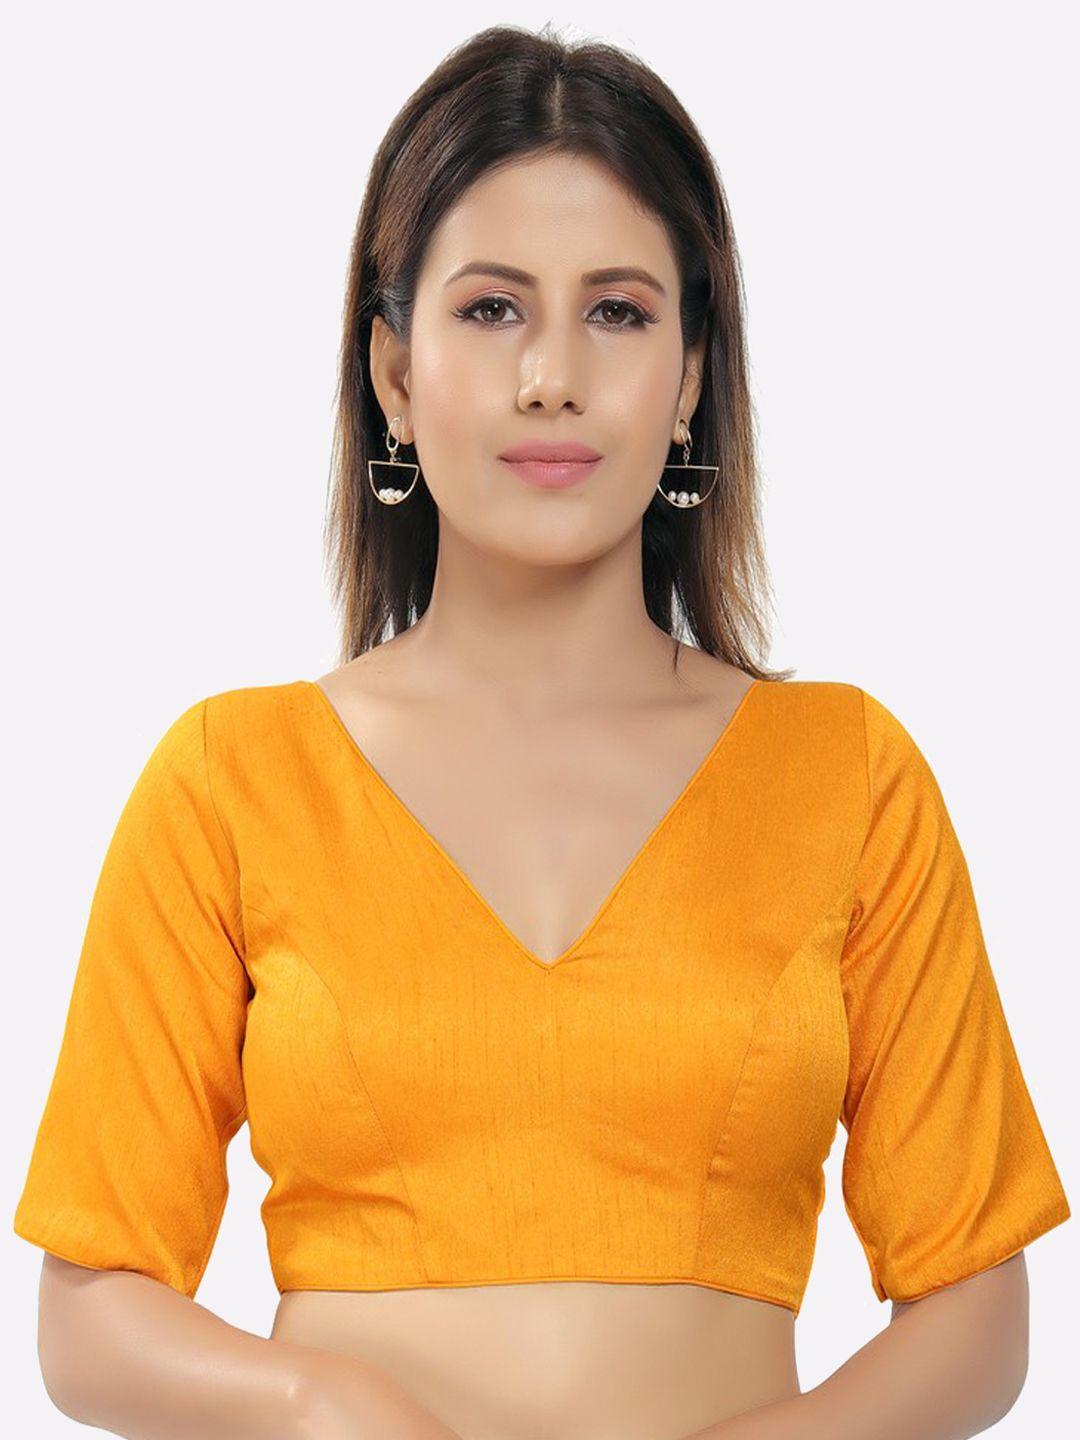 salwar studio women mustard yellow-coloured solid saree blouse